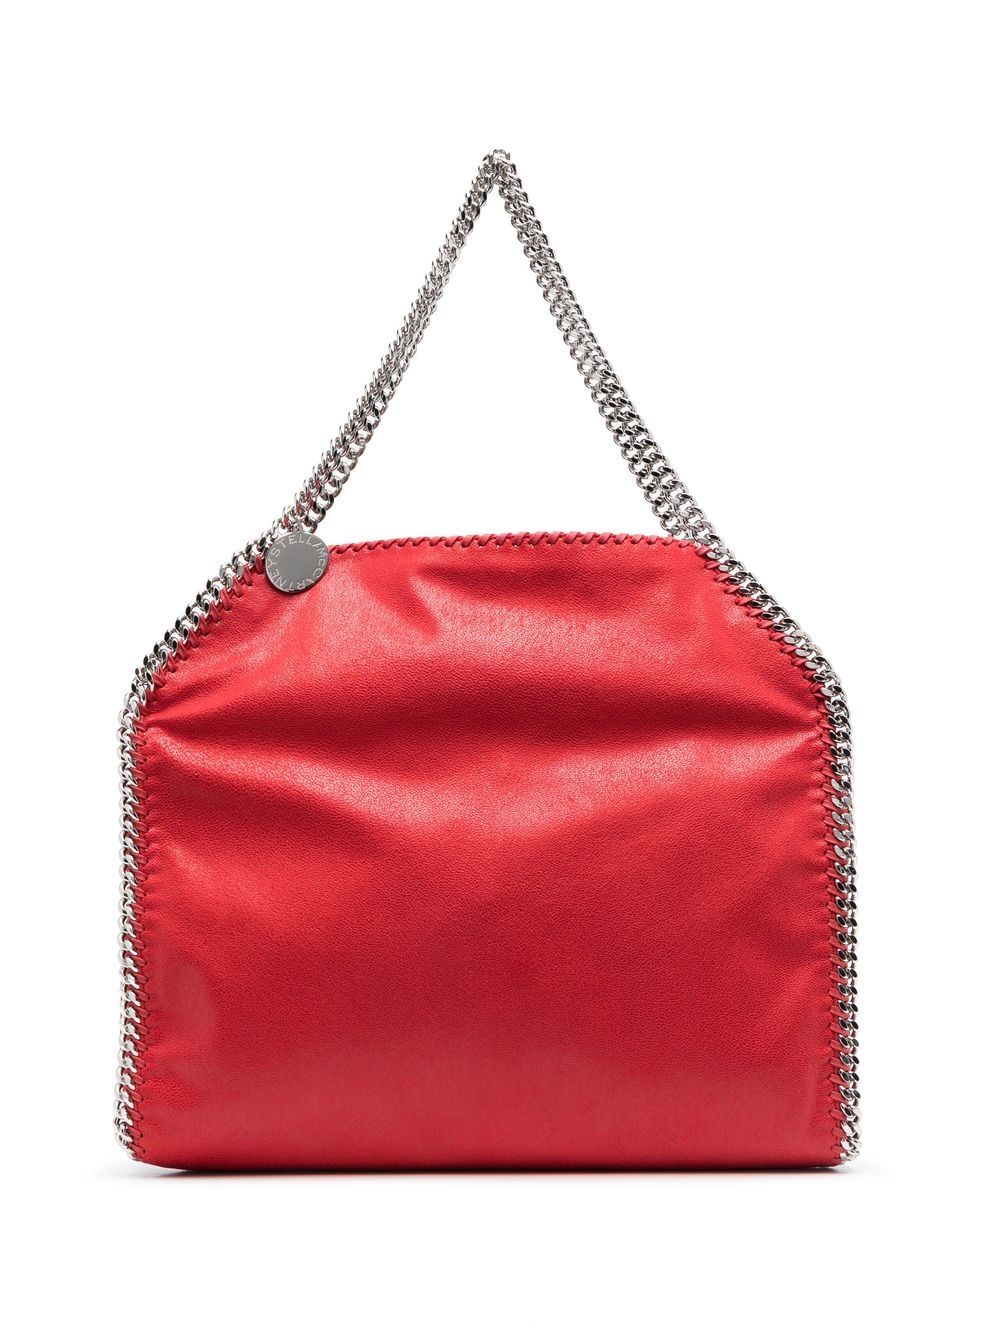 Stella McCartney large Falabella tote bag - Red